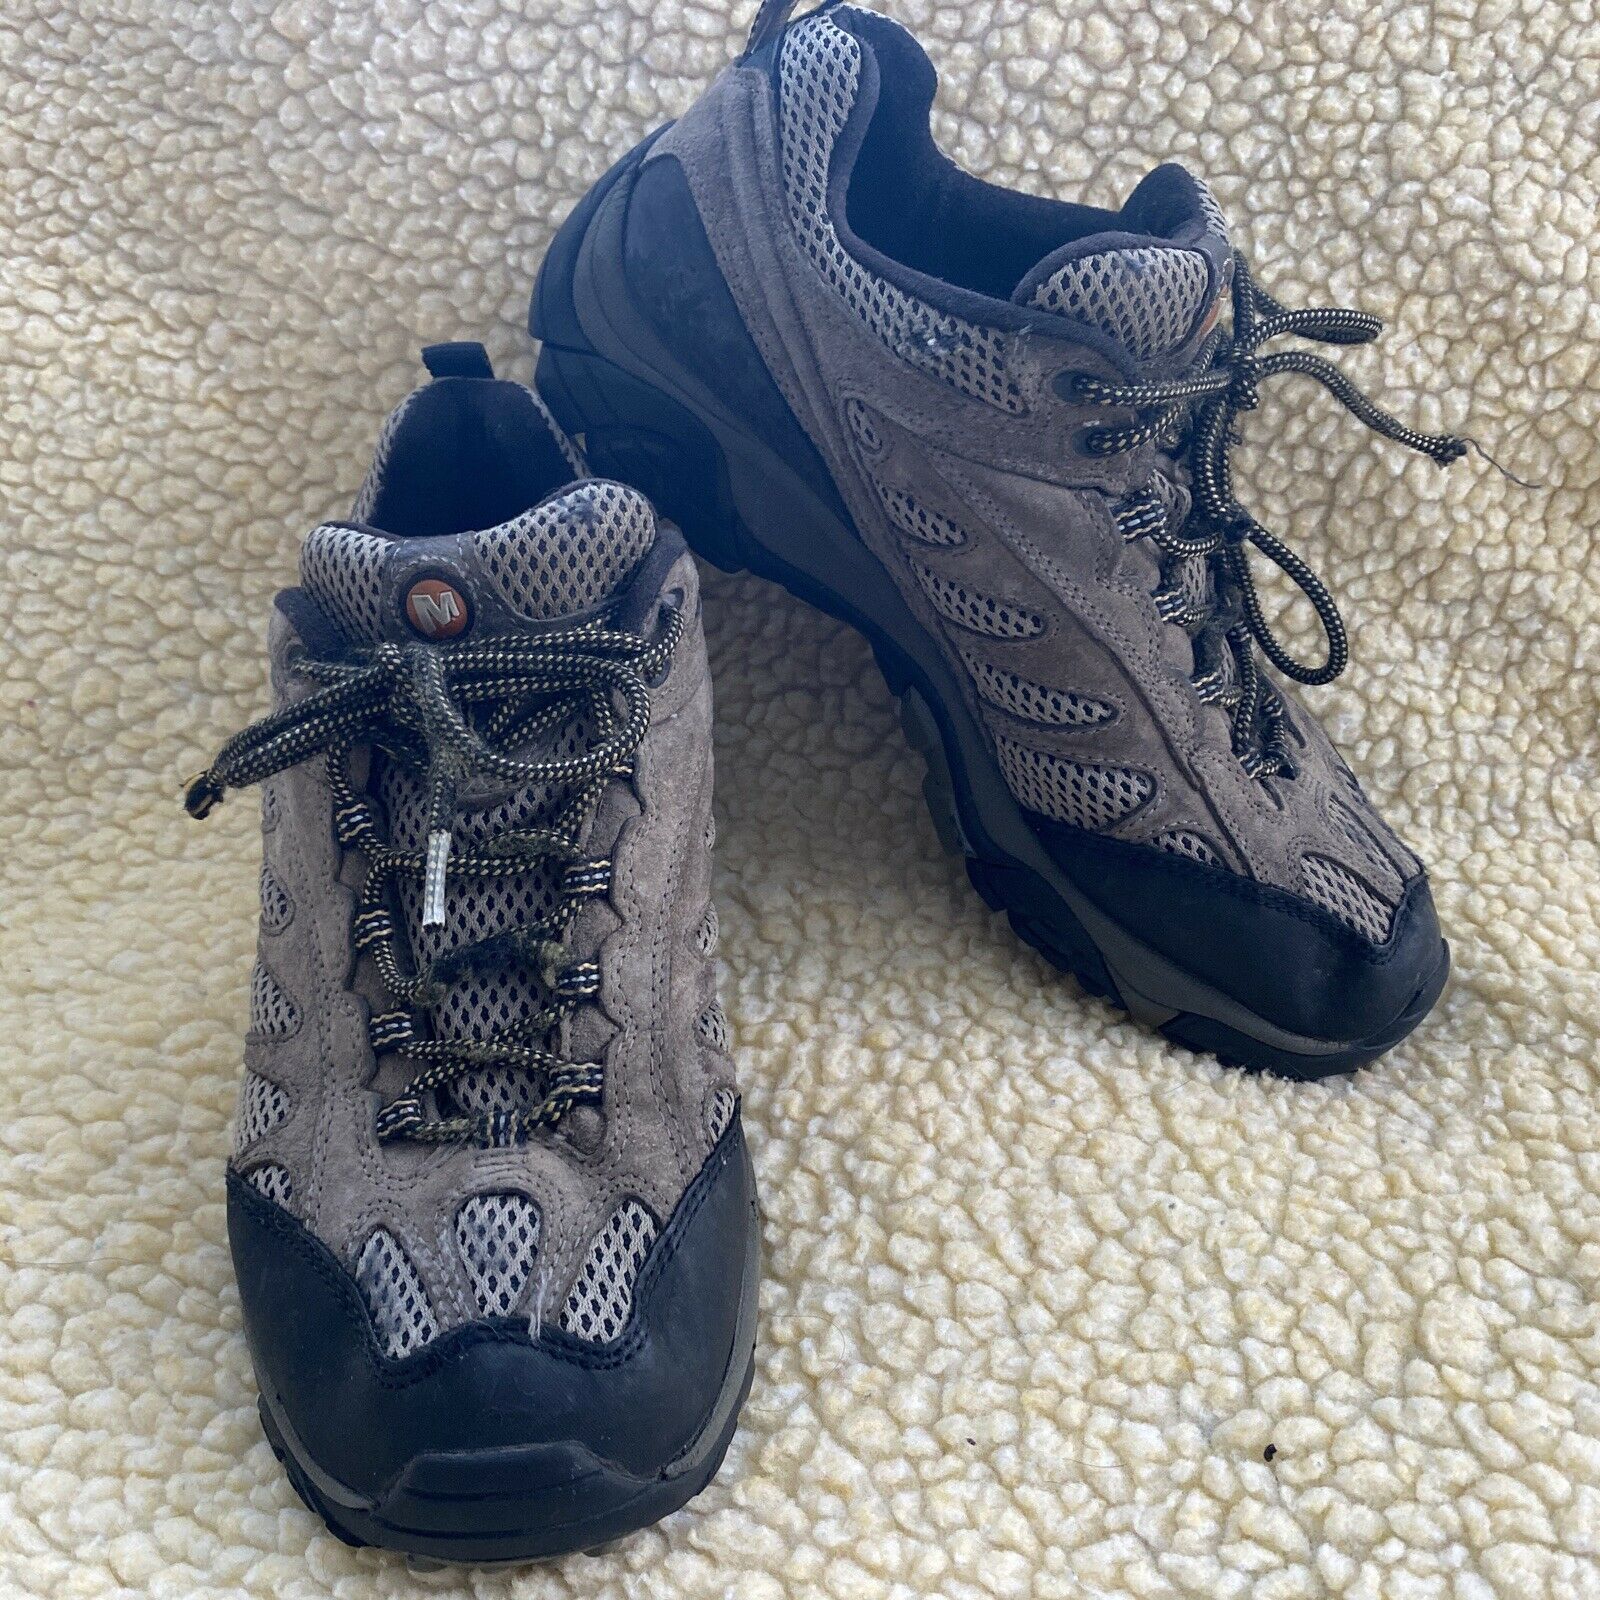 Merrell Mens Hiking Trail Walking Shoes Continuum Vibram Soles Size 10.5